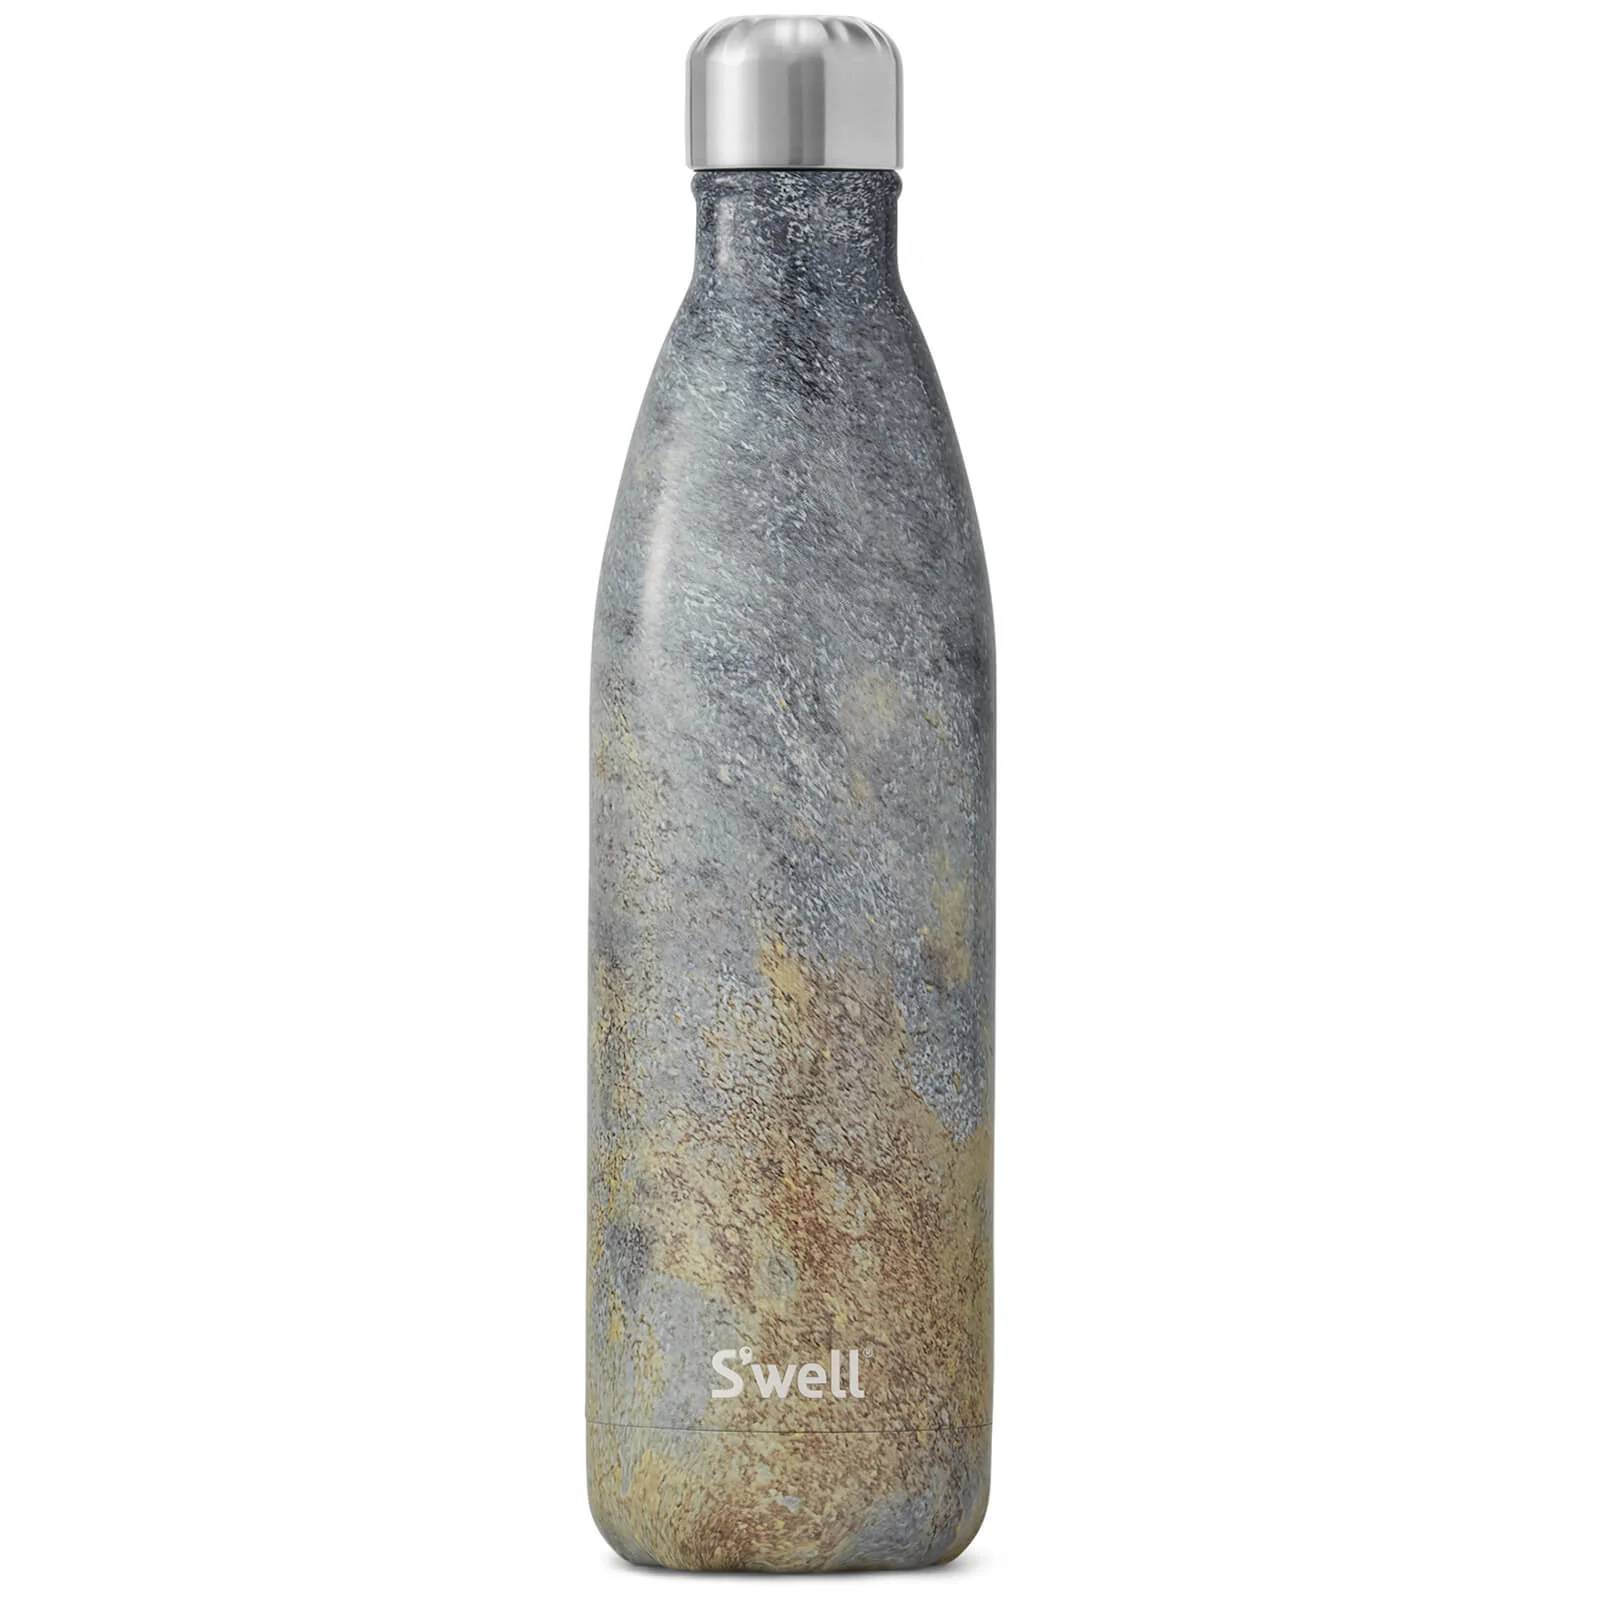 S'well Golden Fury Water Bottle 750ml Image 1